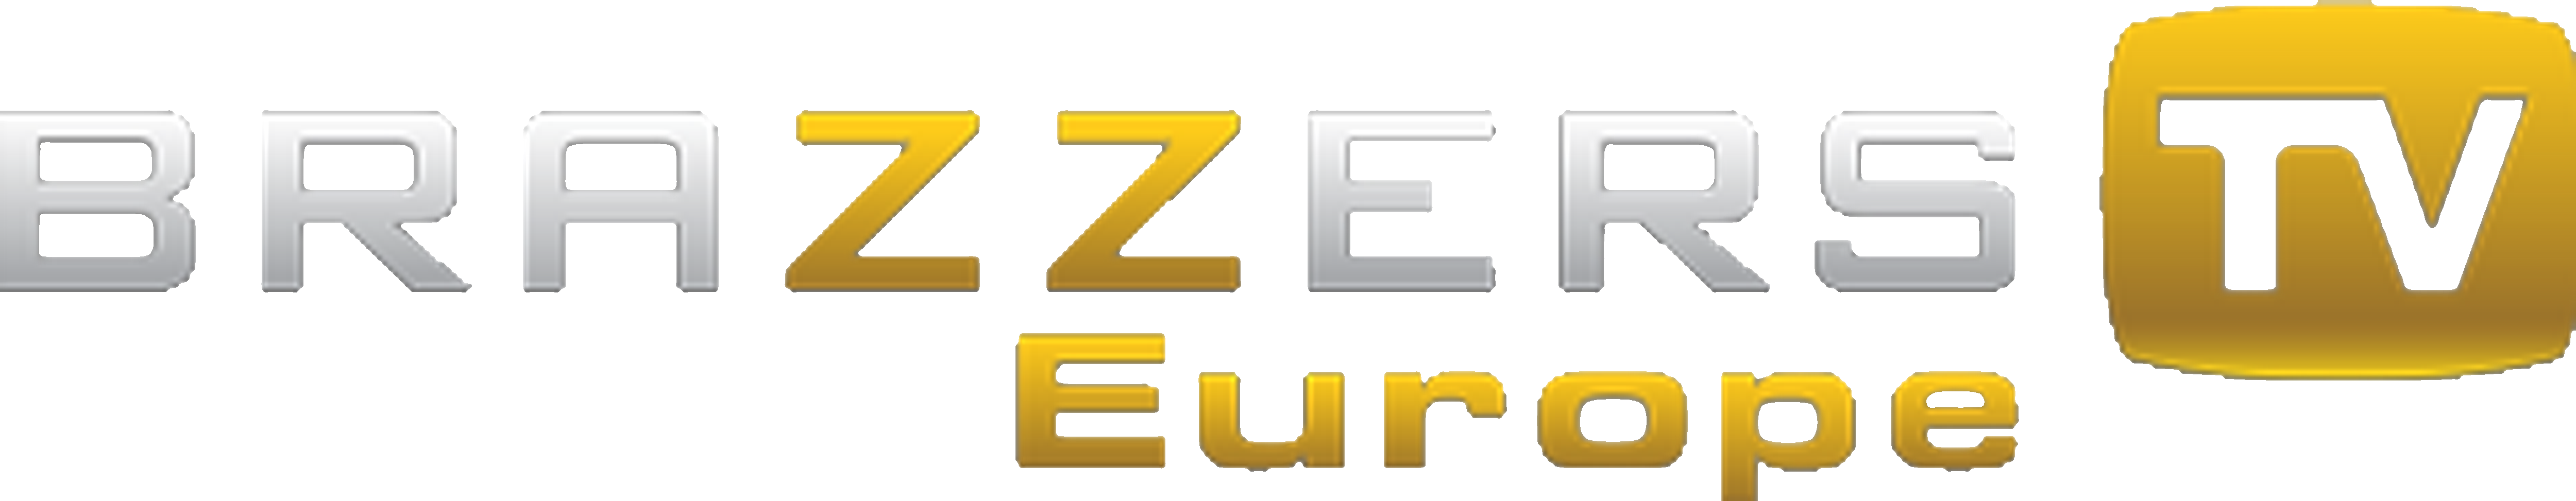 Brazzers TV Europe | Mihsign Vision | Fandom